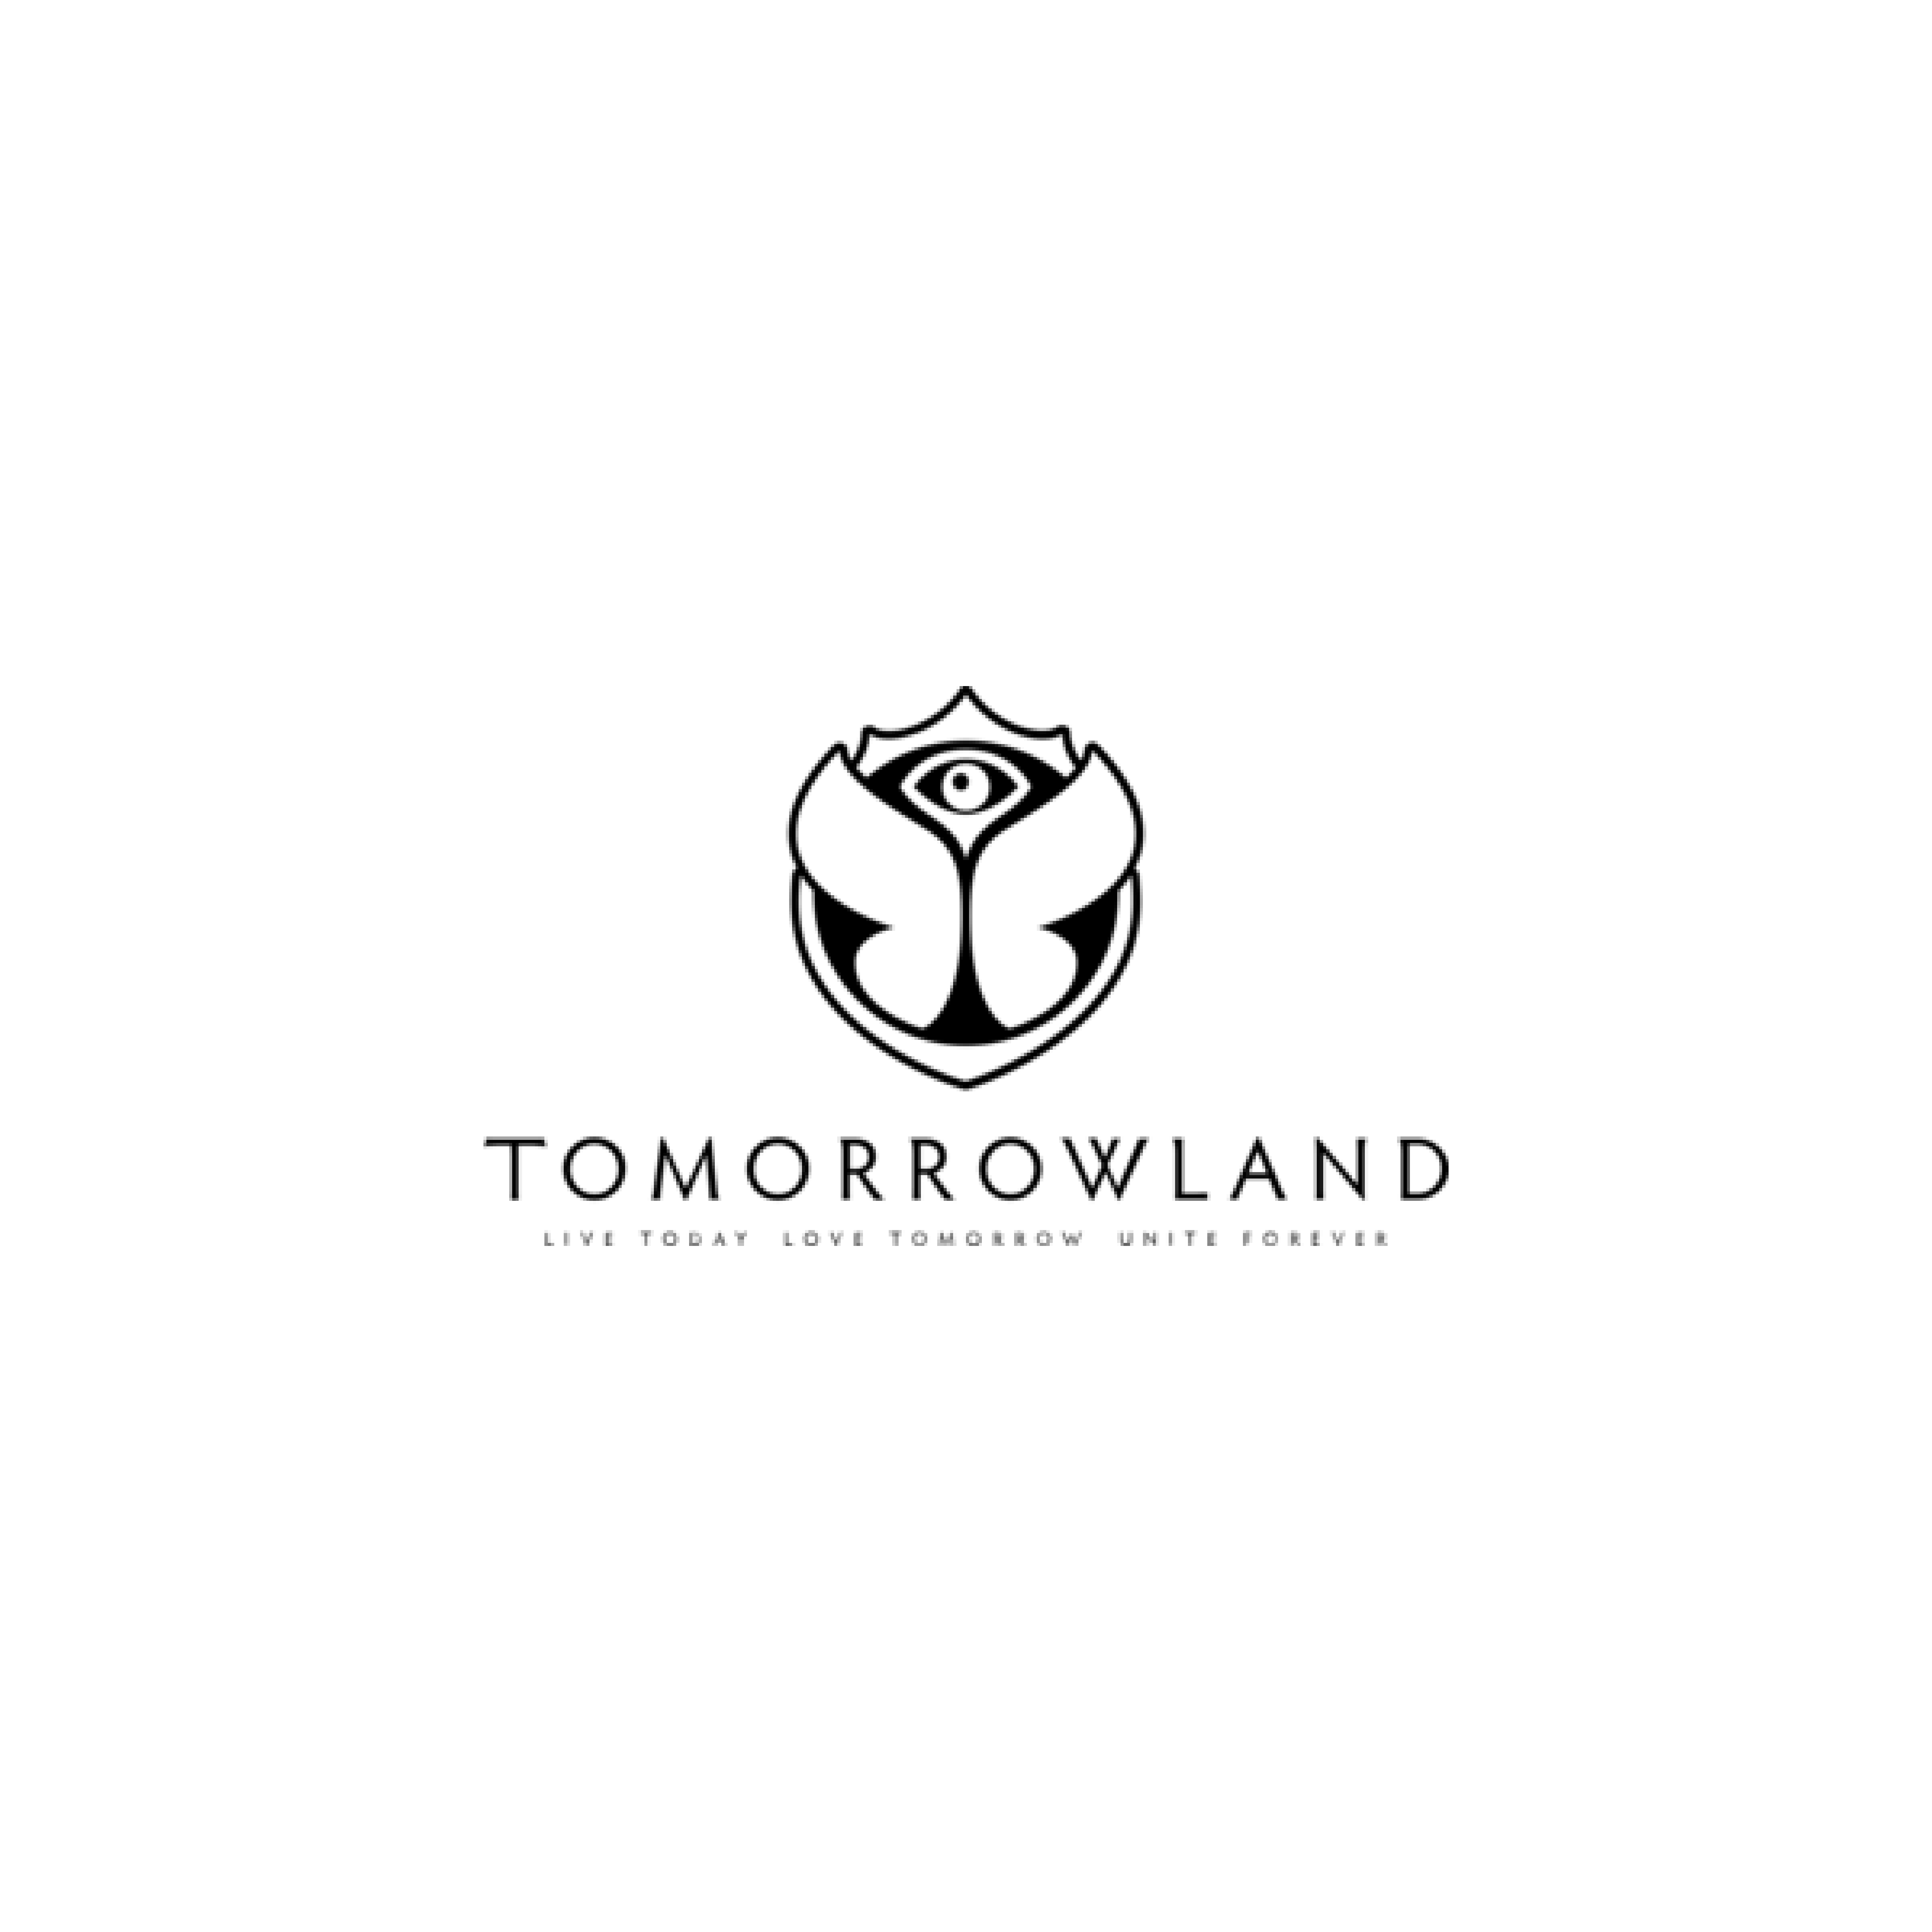 LOGO'S_Tomorrowland logo